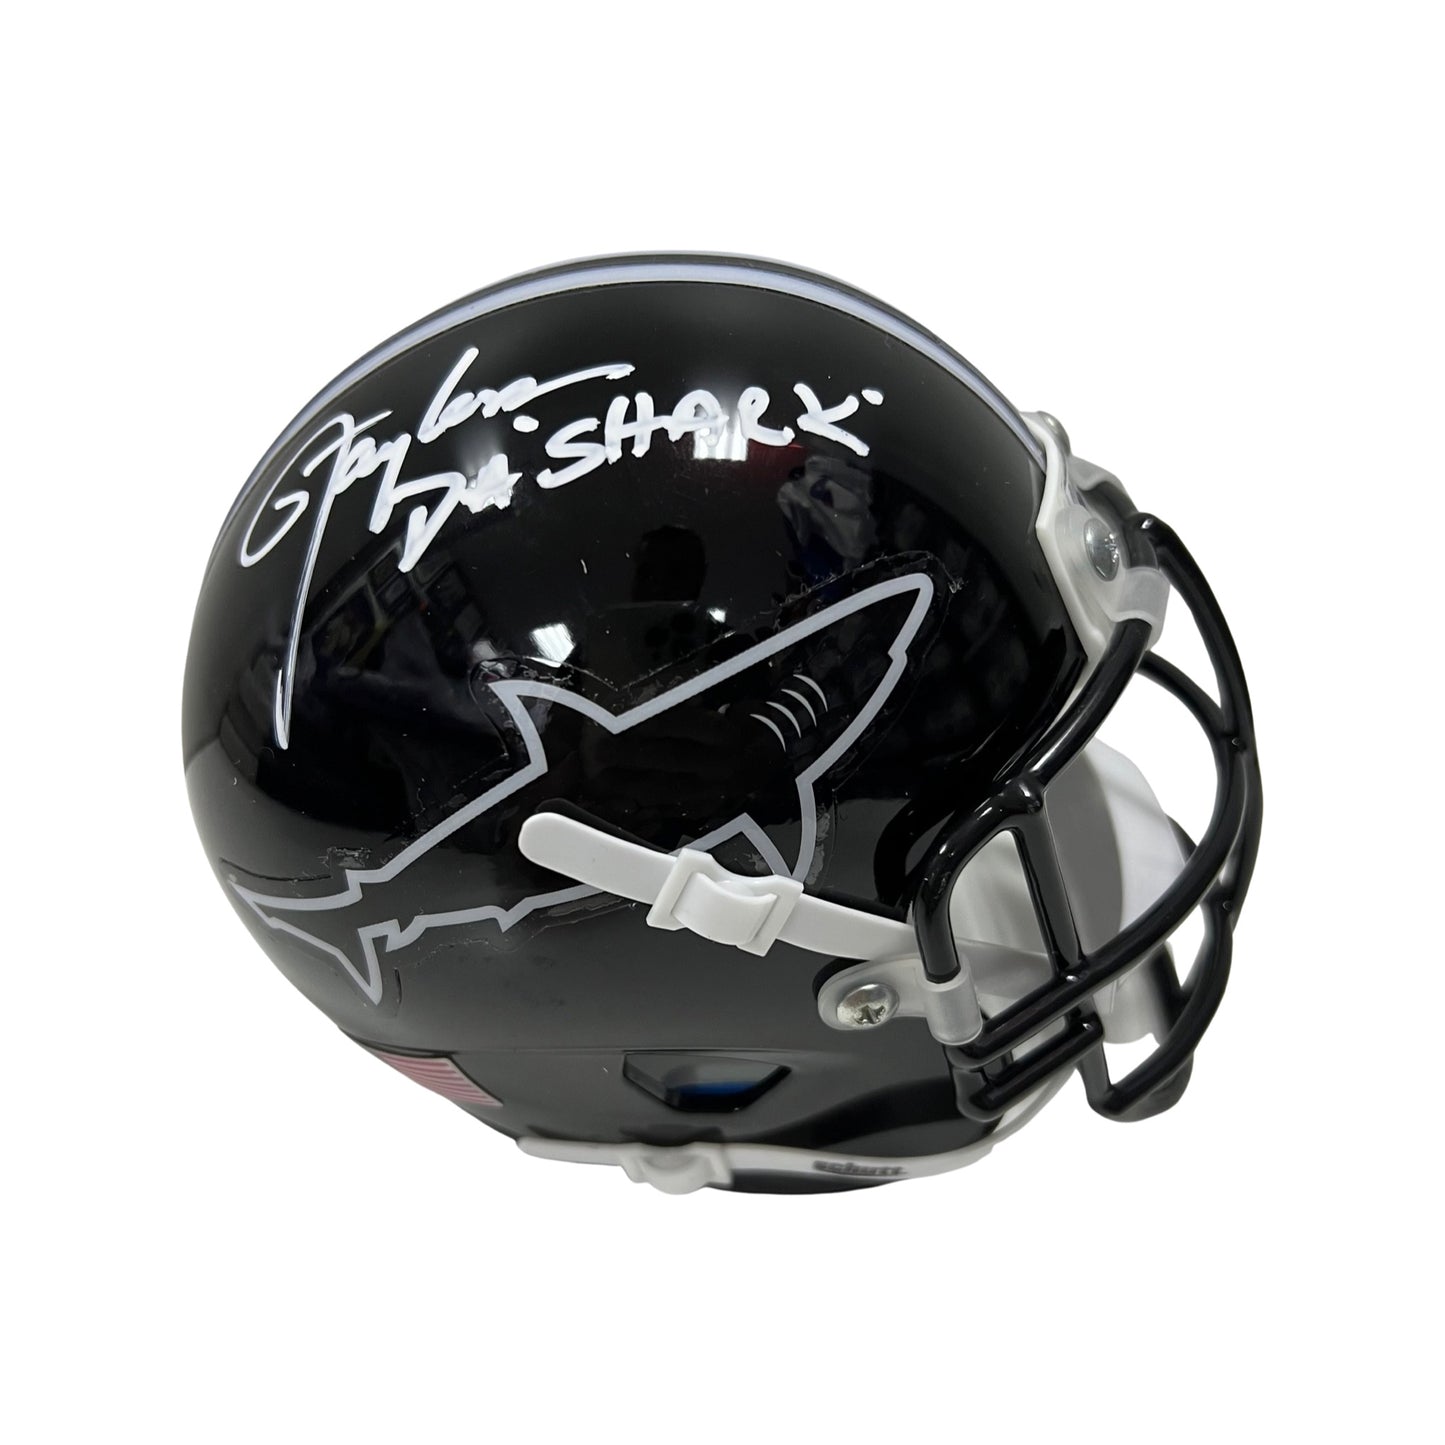 Lawrence Taylor Autographed Any Given Sunday Sharks Mini Helmet “Sharks” Inscription JSA